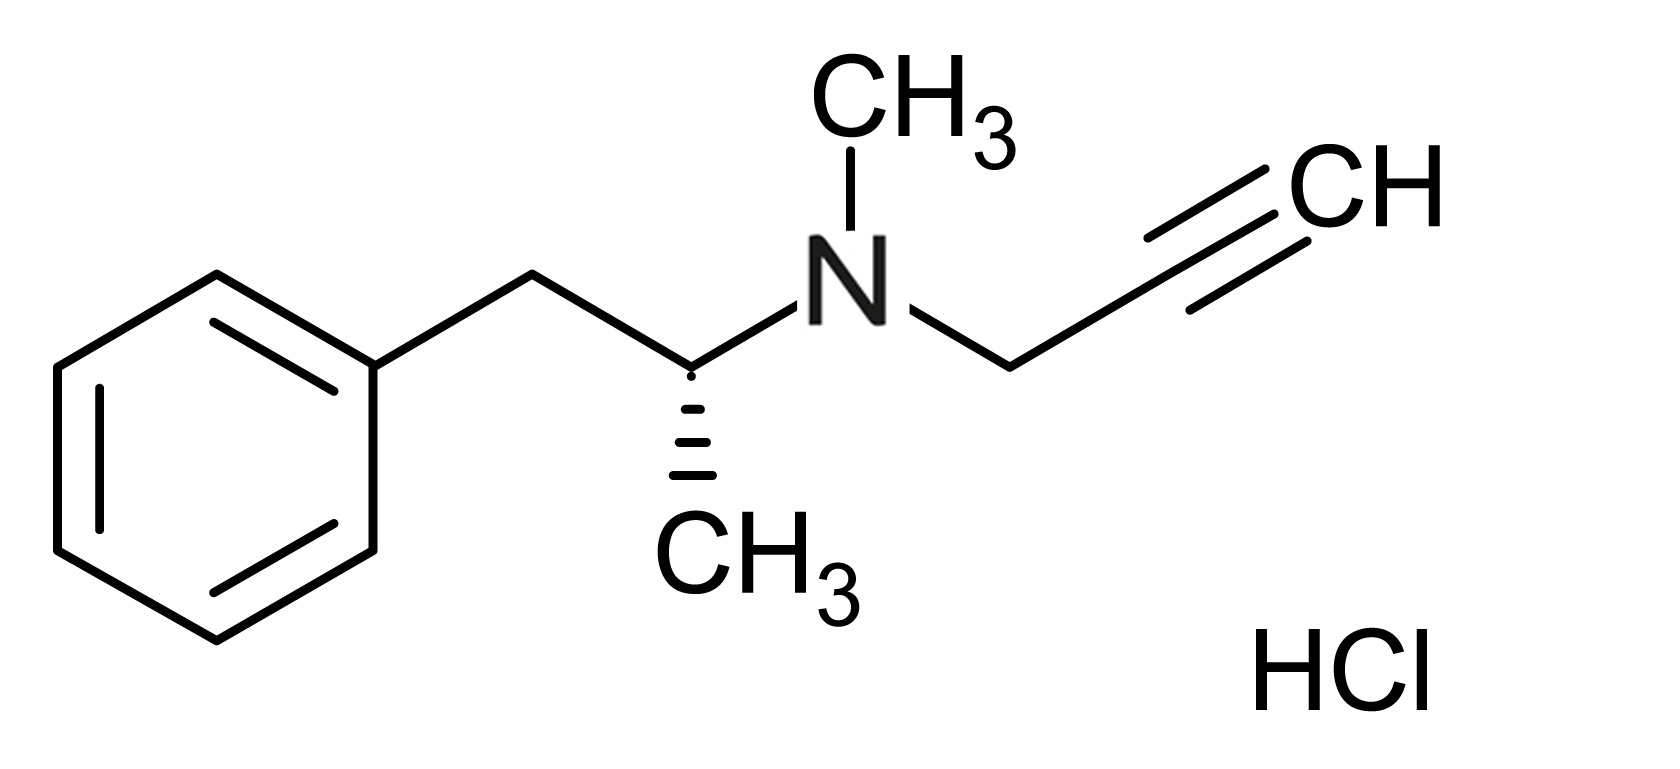 Selegiline Hydrochloride